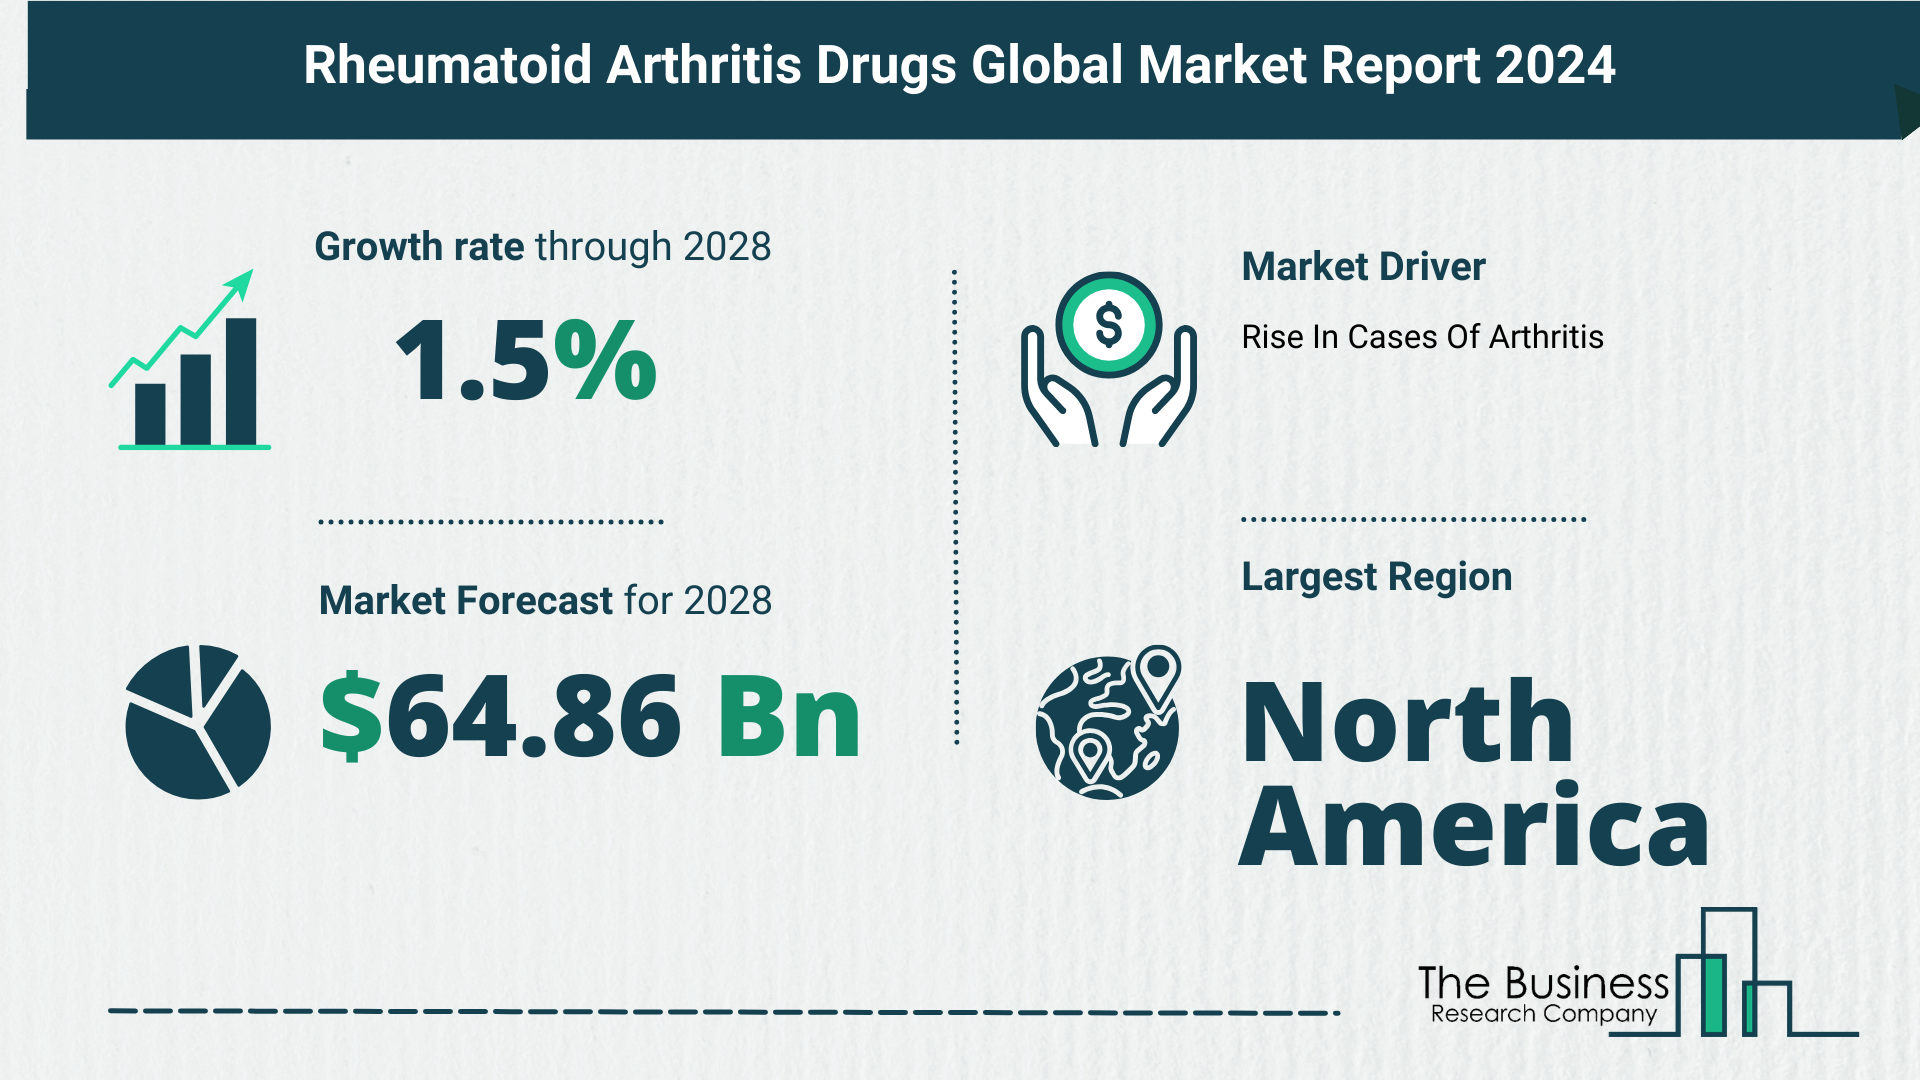 Top 5 Insights From The Rheumatoid Arthritis Drugs Market Report 2024